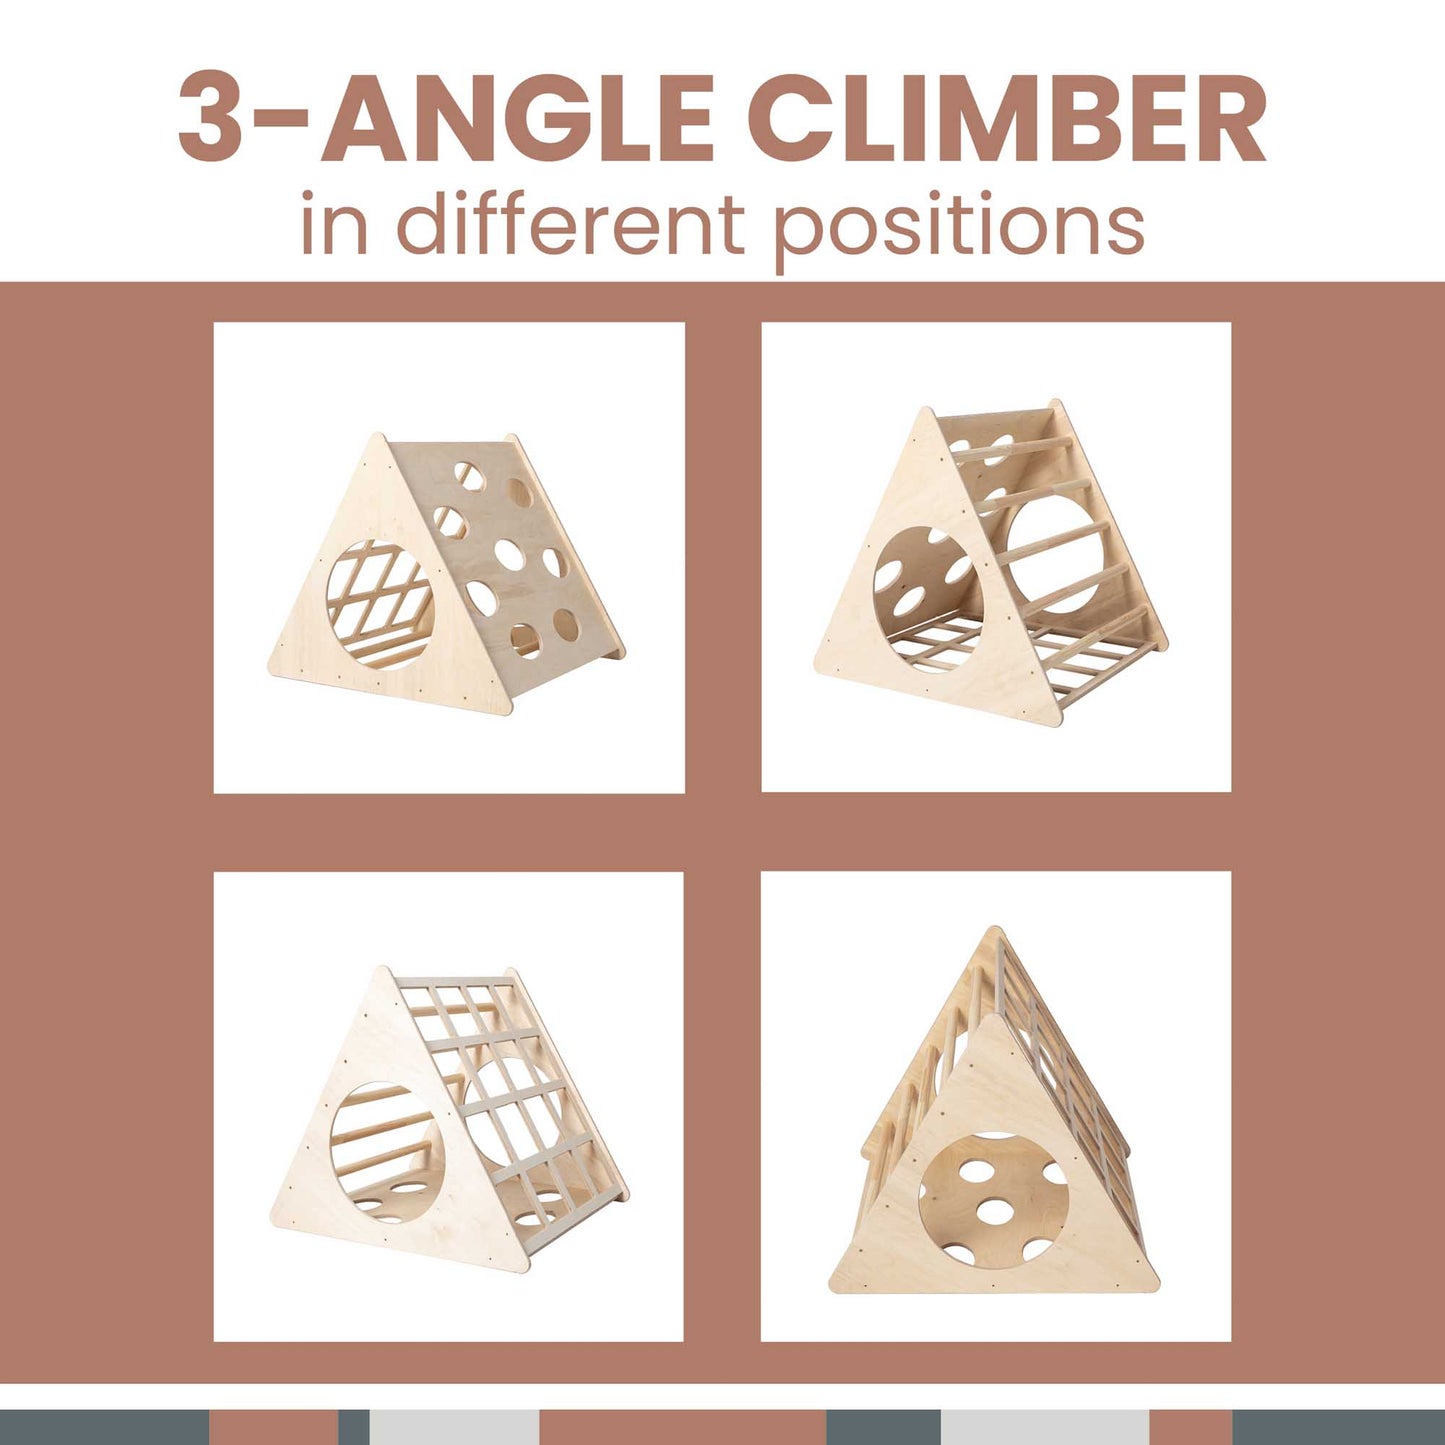 Climbing triangle + Climbing arch + a ramp